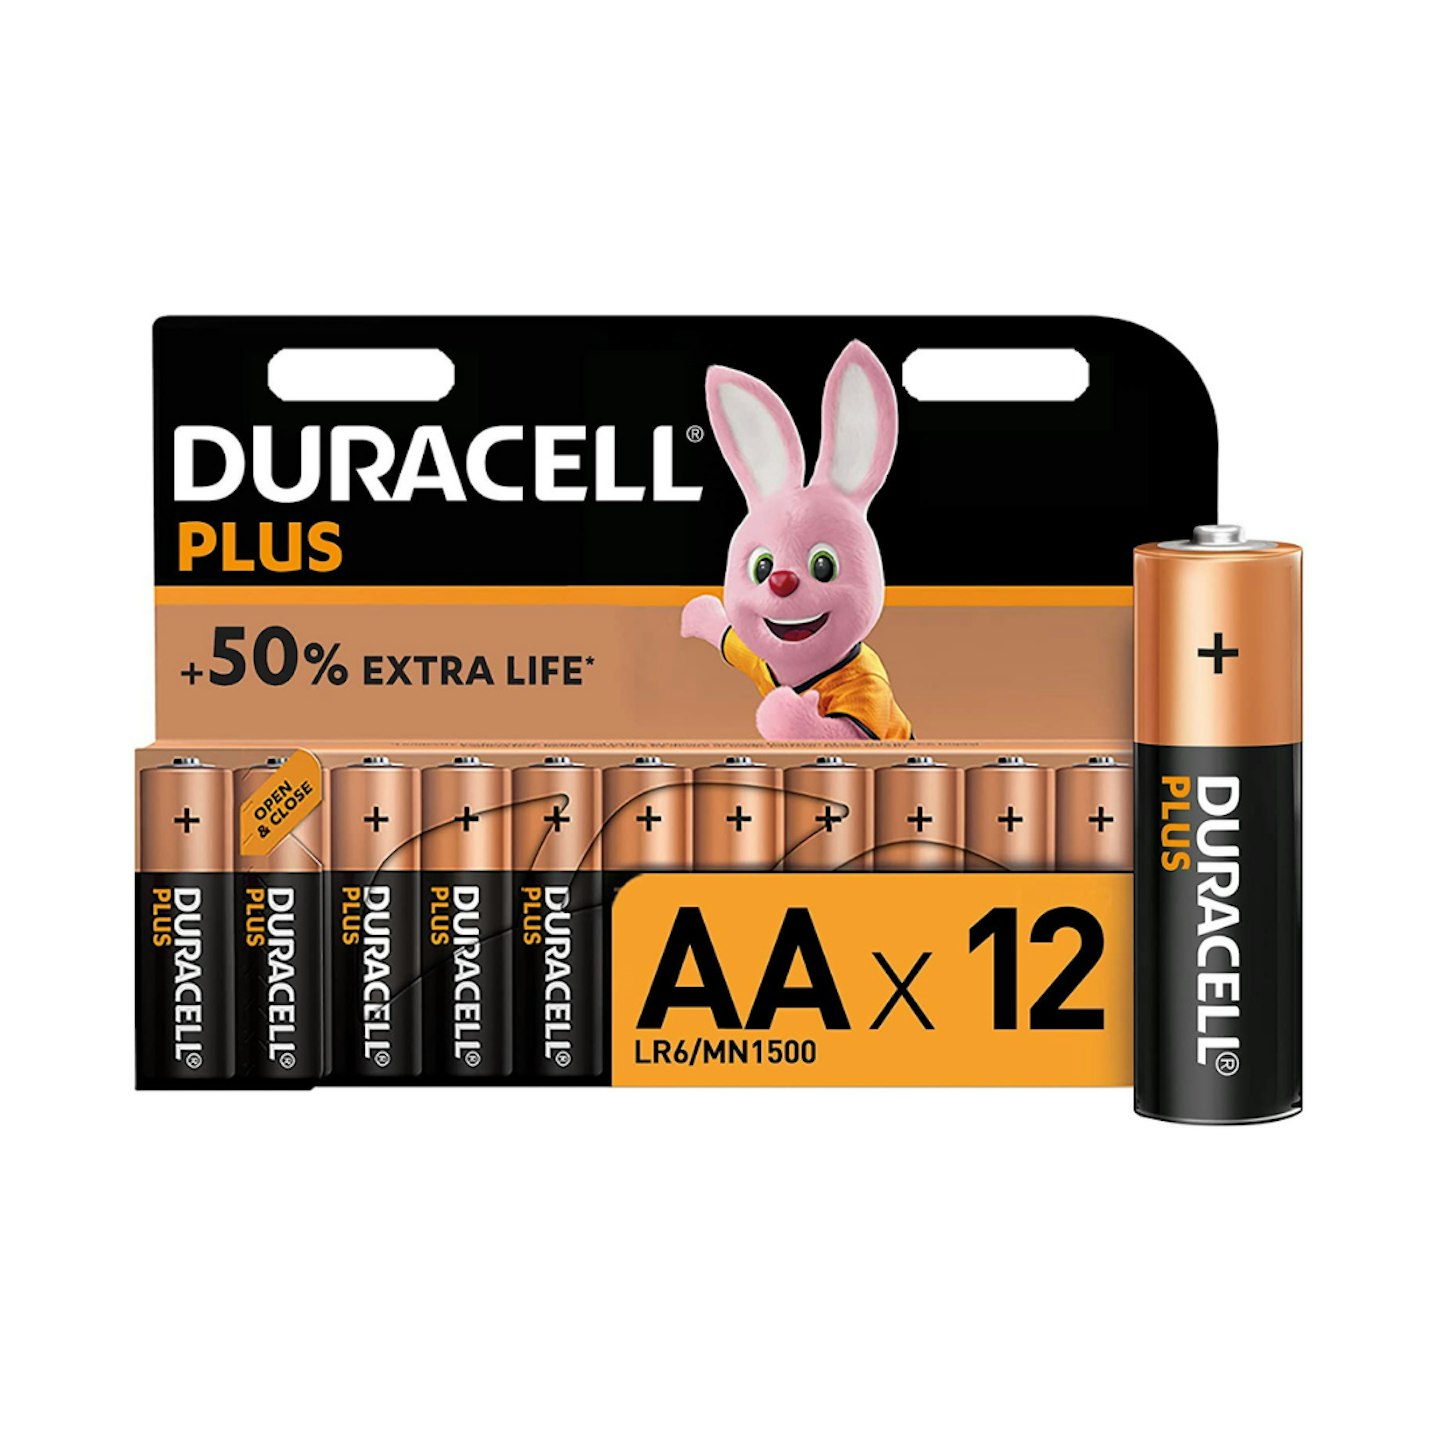 Duracell Plus AA Alkaline Batteries